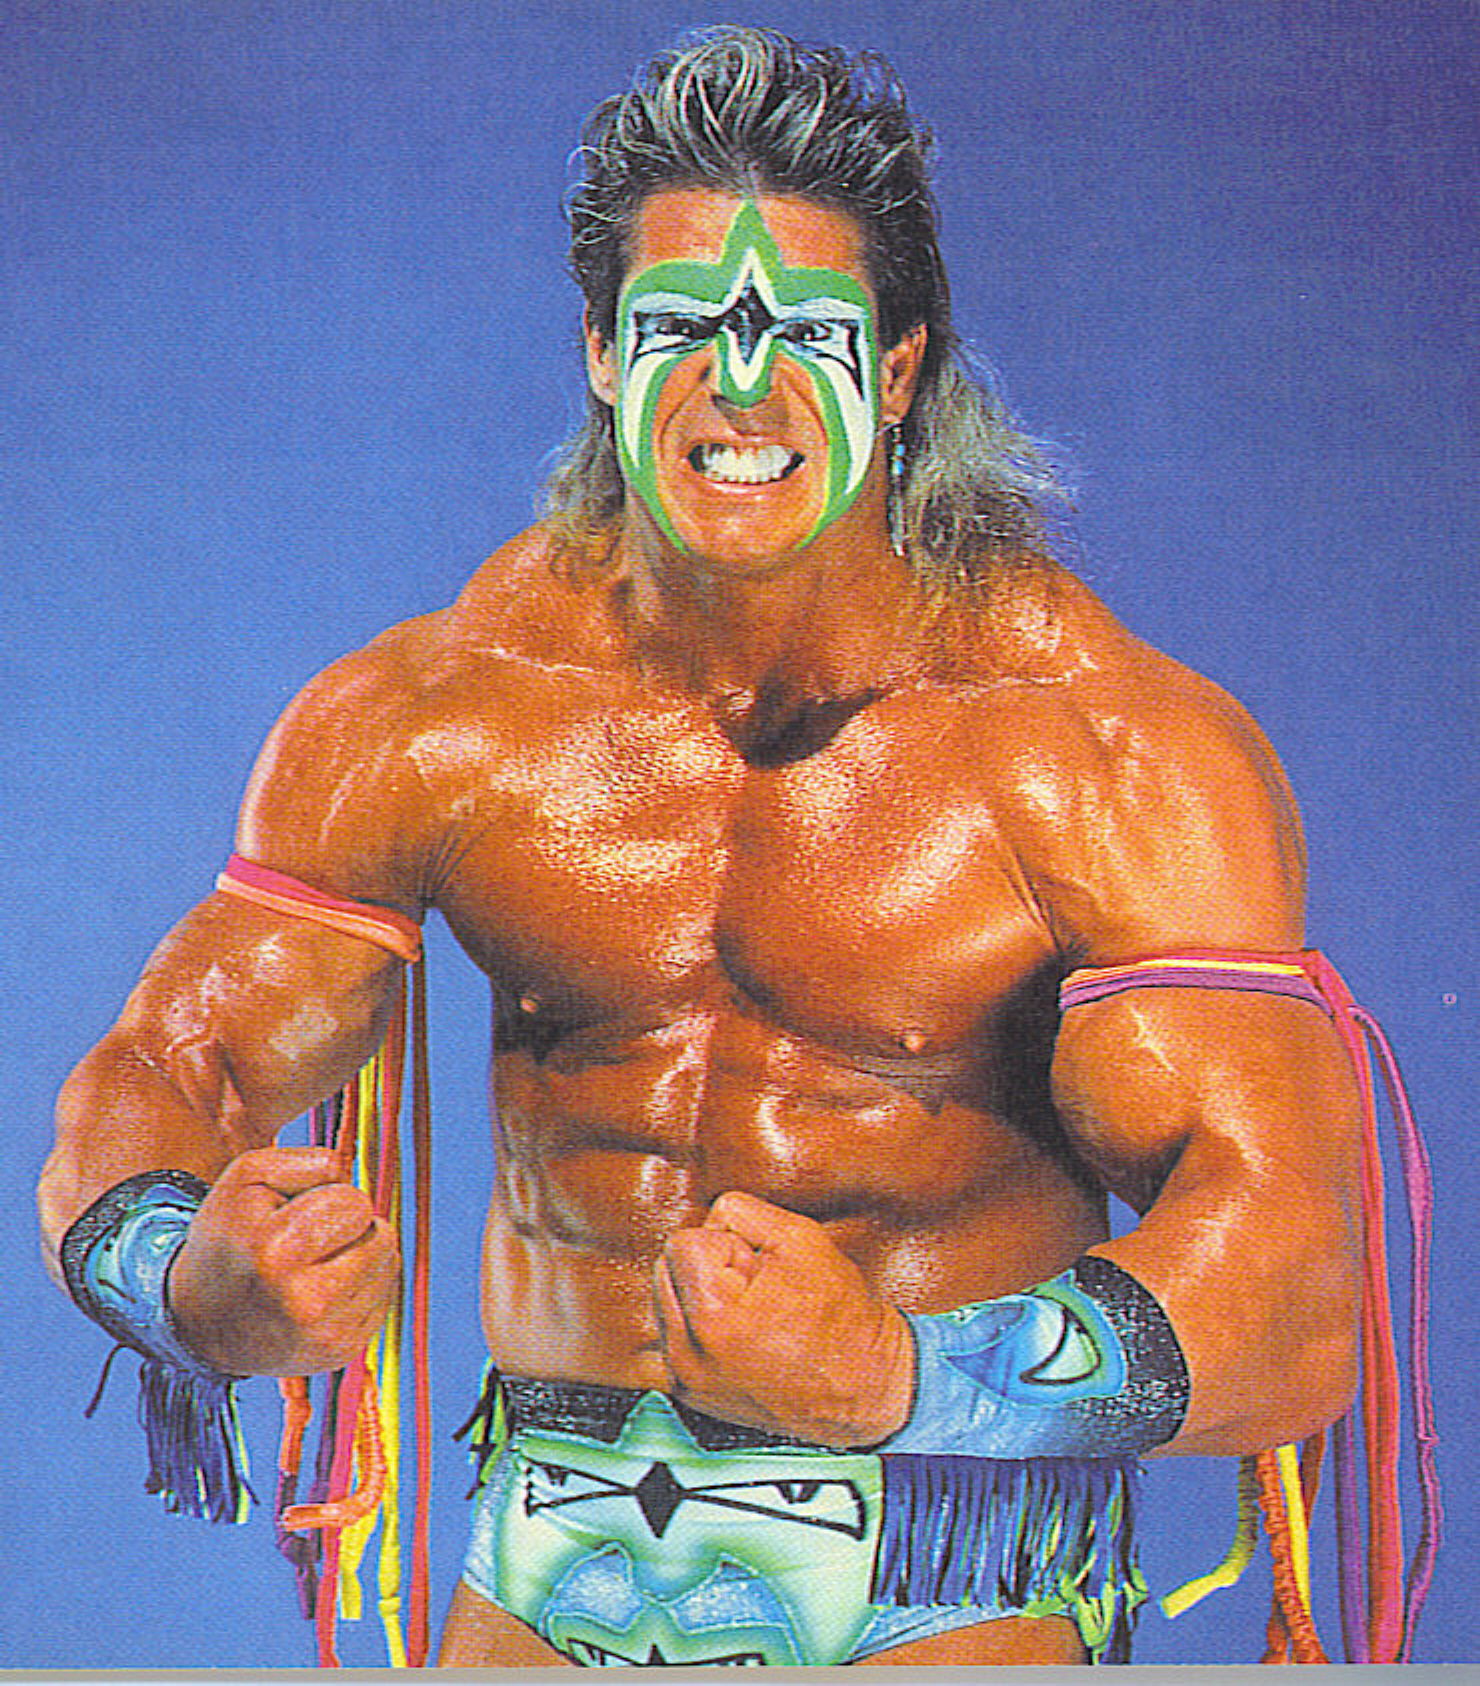 WWE Legend The Ultimate Warrior Wallpaper